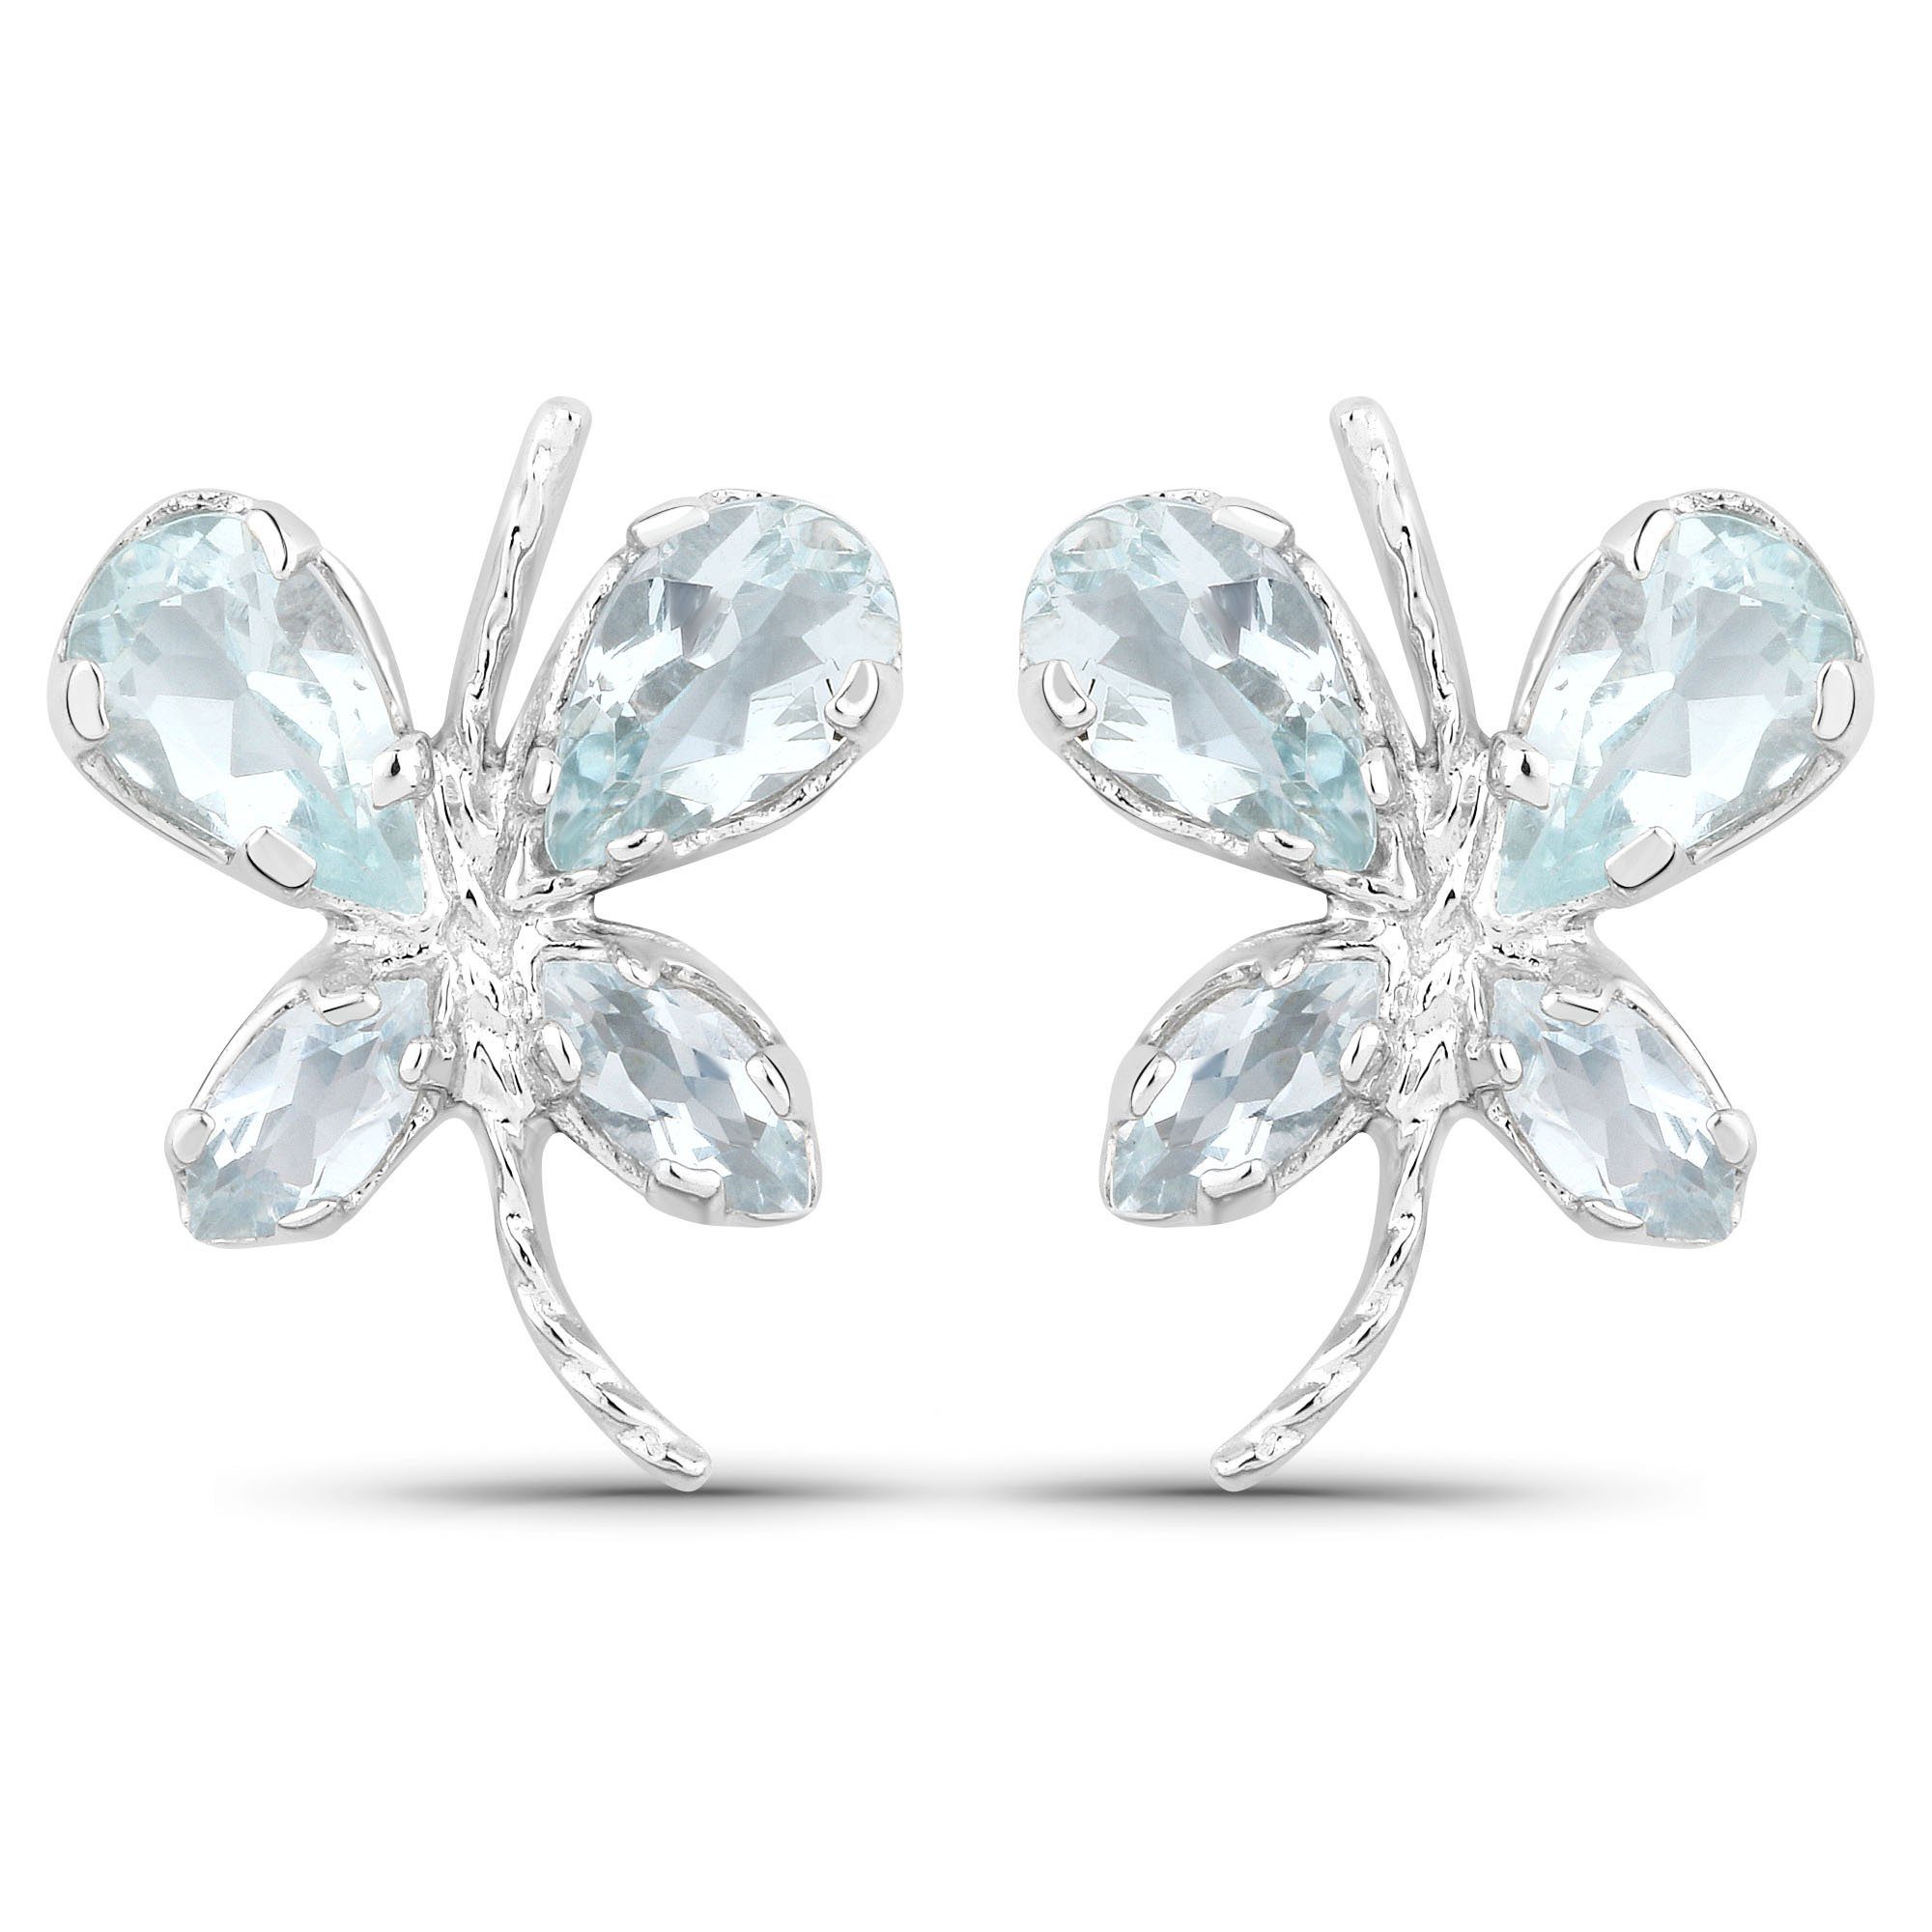 spottbillig verkaufen Vira Jewels Paar Ohrstecker 925-Sterling Silber rhodiniert Aquamarine hellblau Glänzend